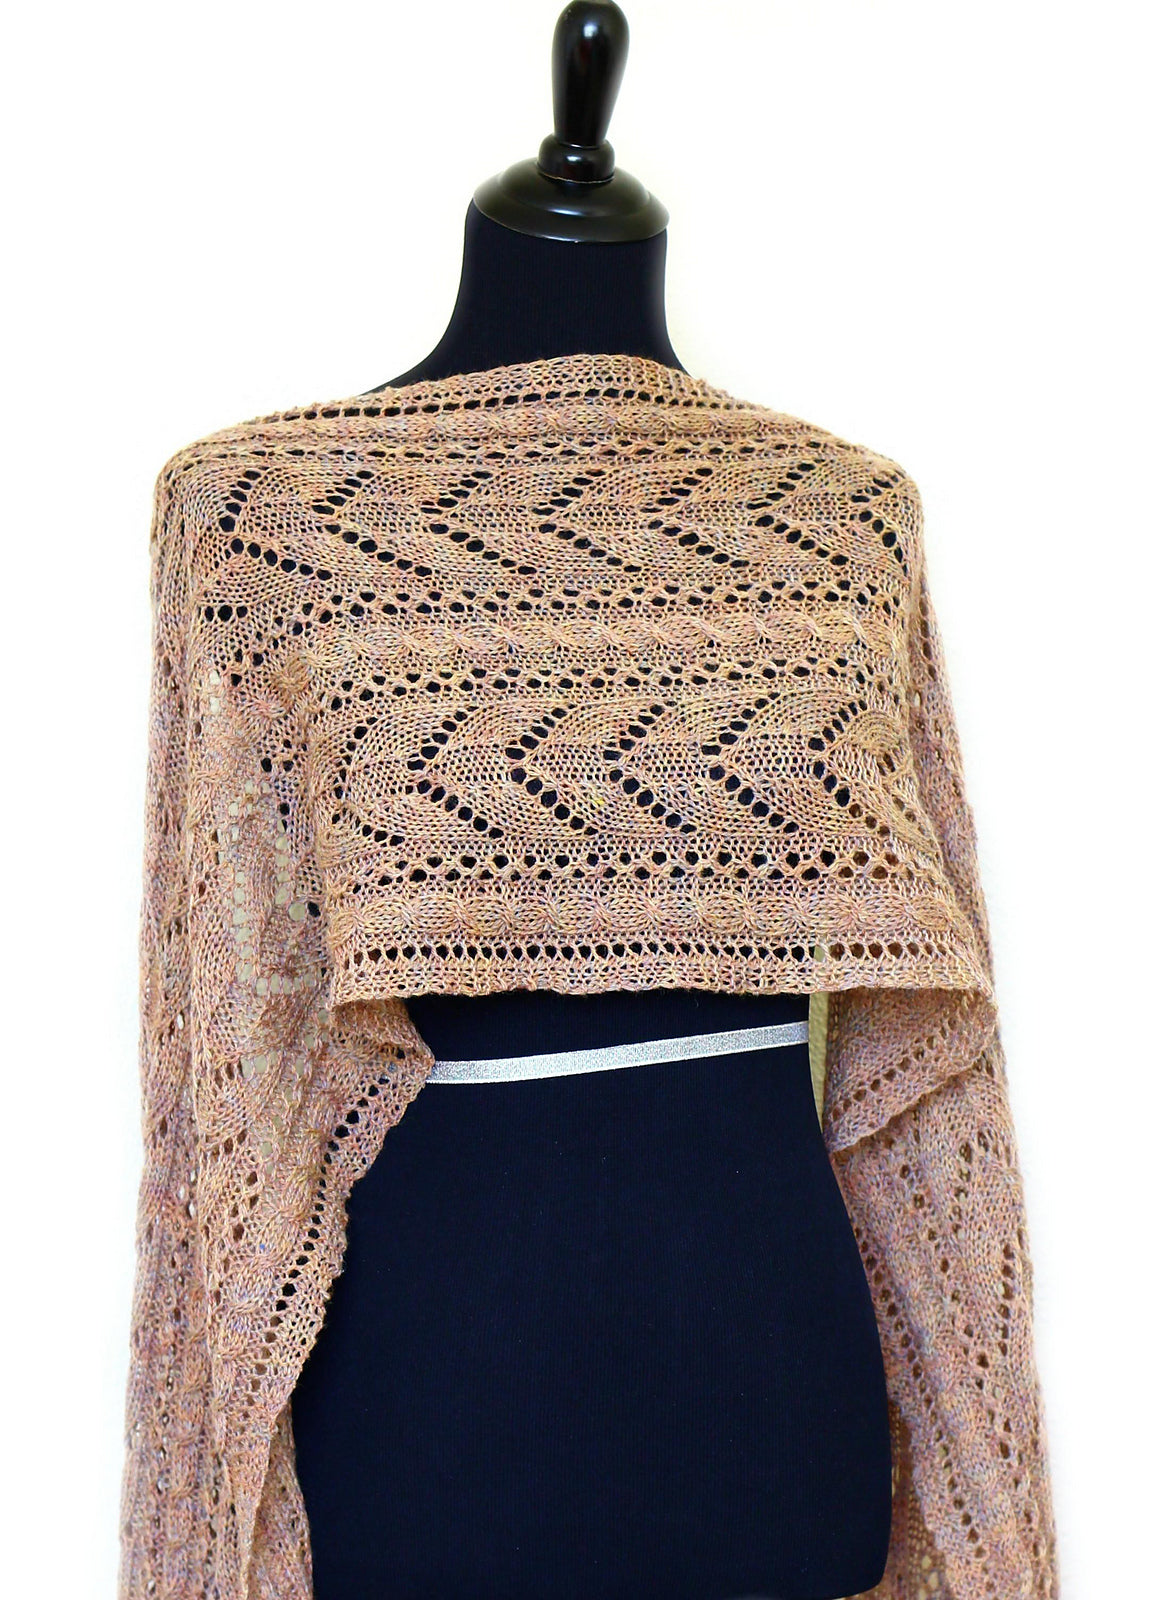 Leola Wrap - Knitted shawl pattern, knitting tutorial, PDF